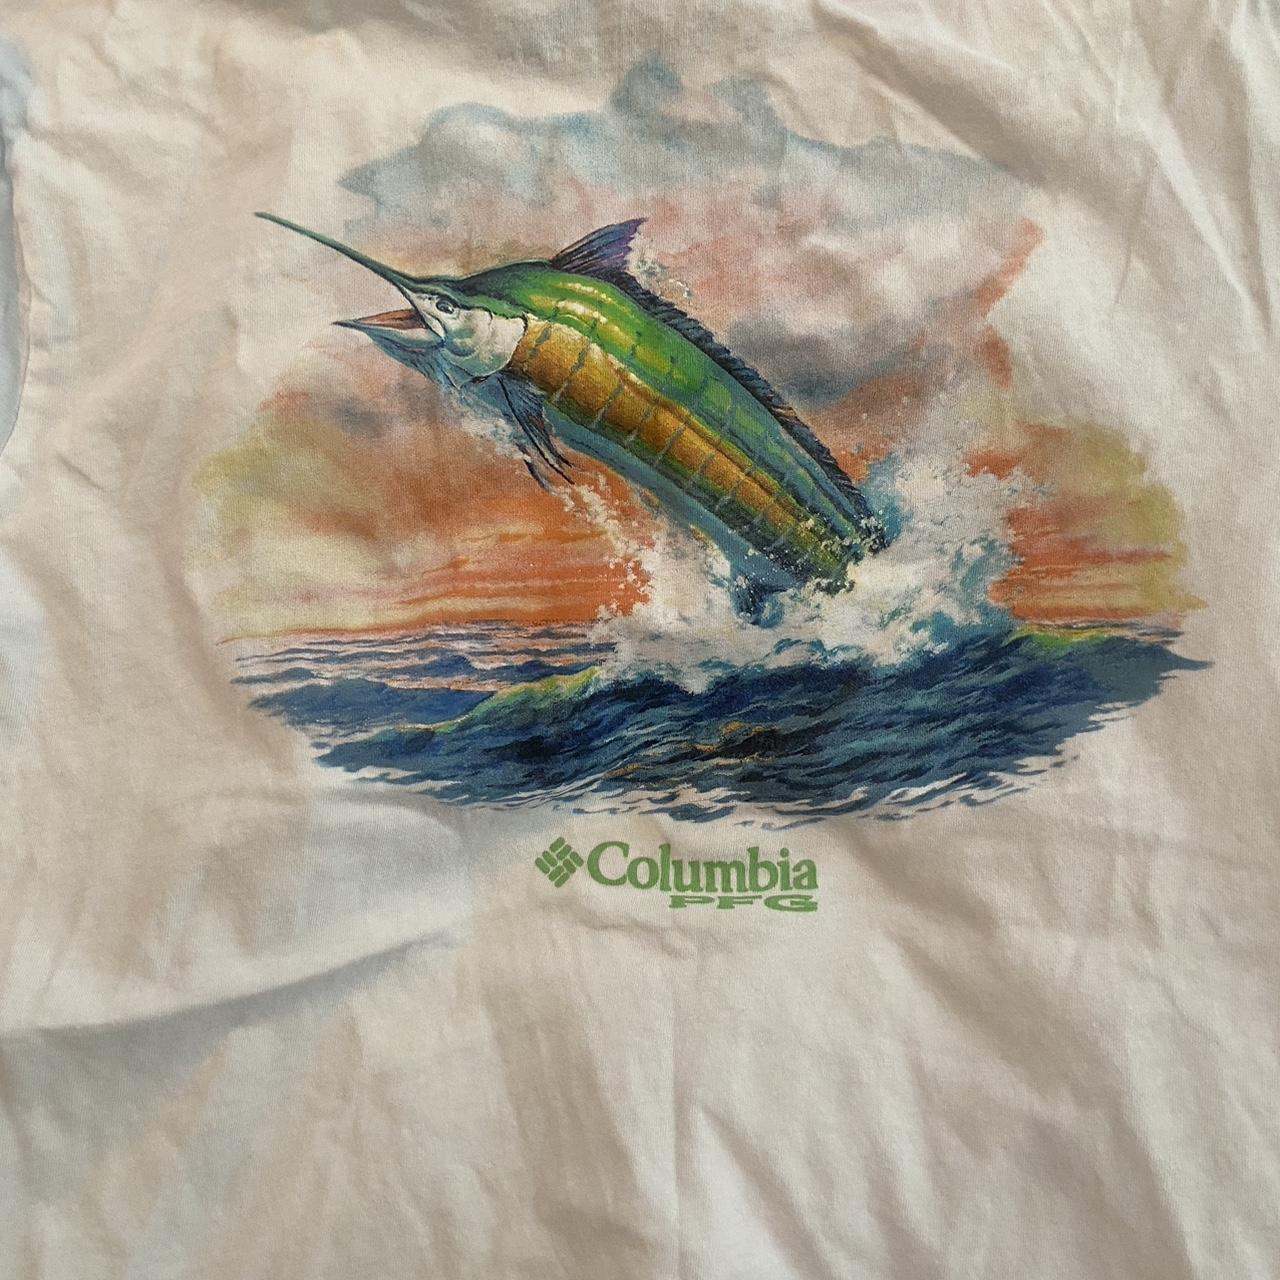 Colombia fishing shirt - Depop